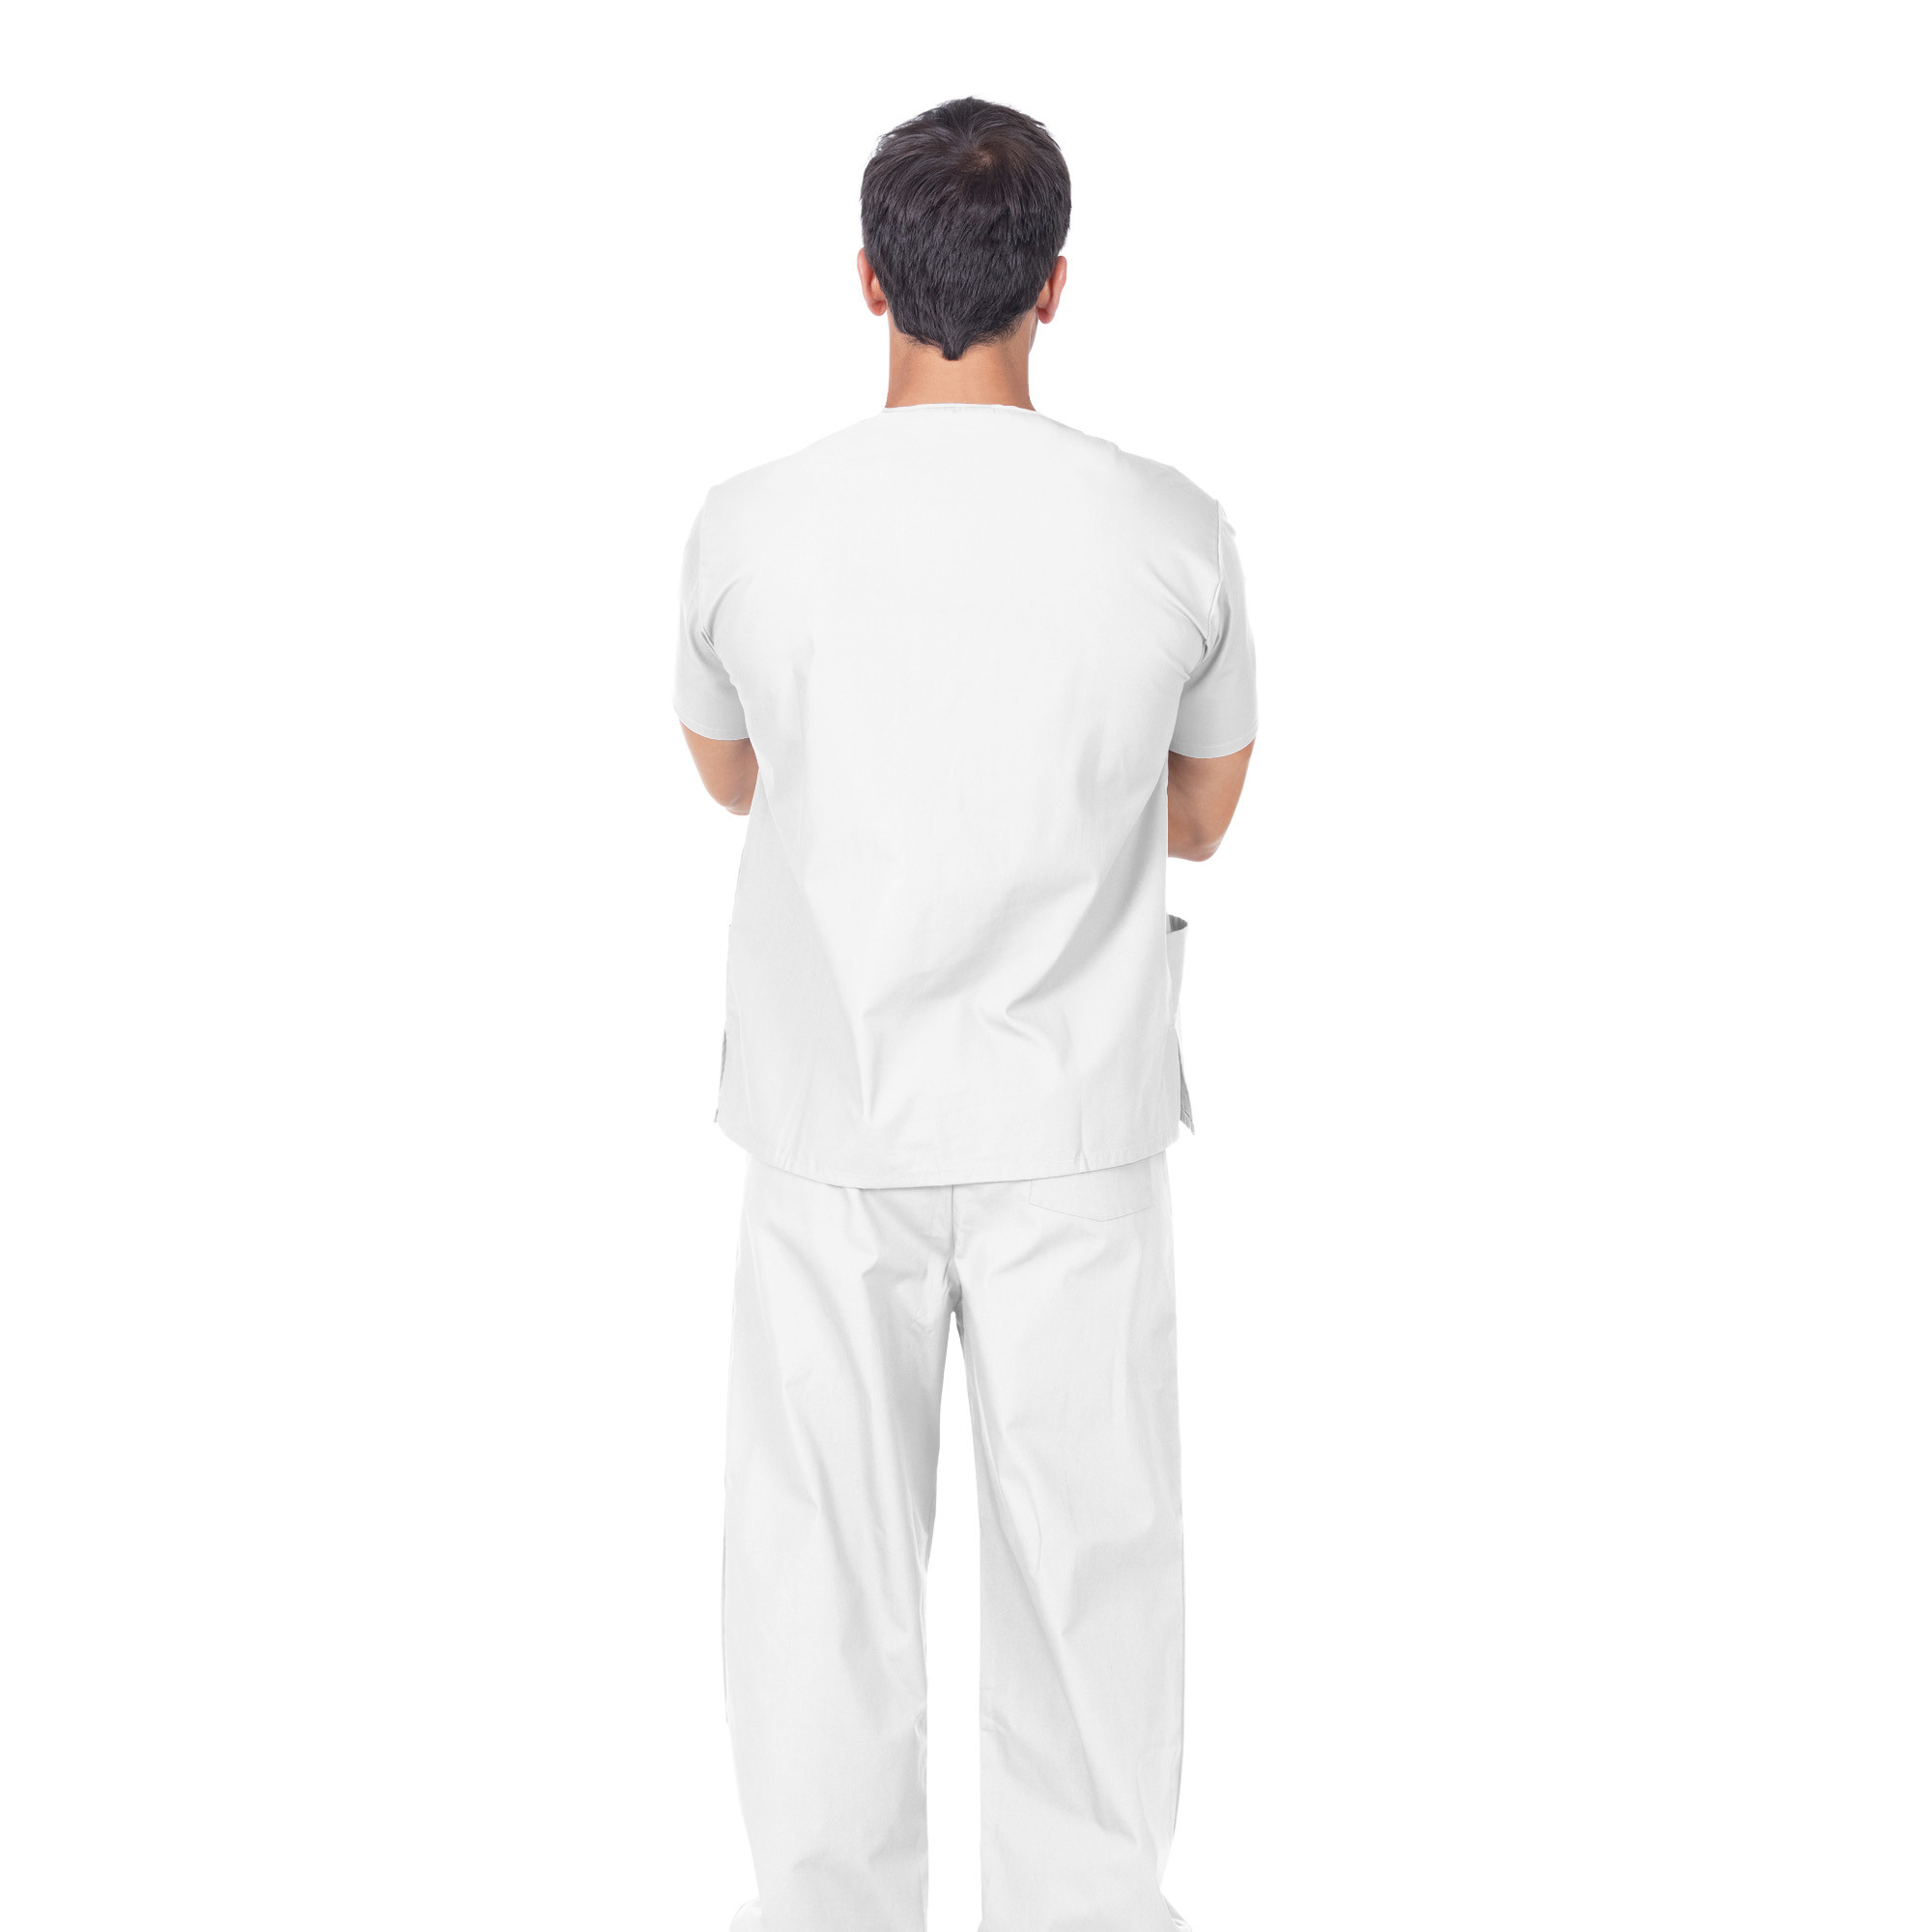 Unisex white cotton professional trousers size XXL